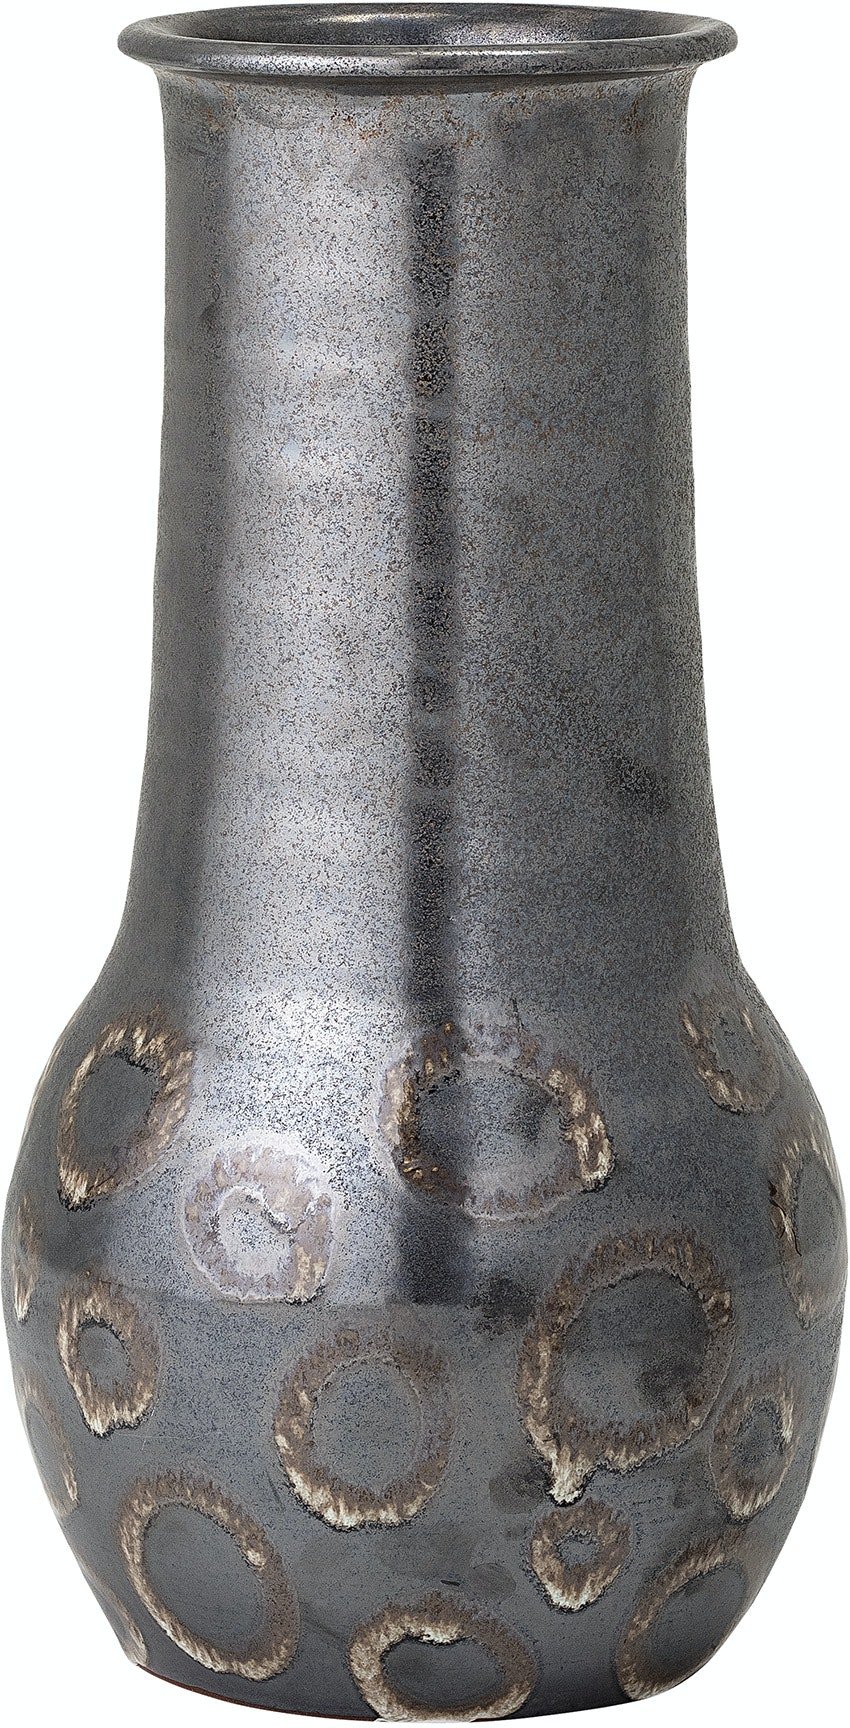 10: Gorm, Deko Vase by Bloomingville (D: 24 cm. H: 47 cm., Sort)